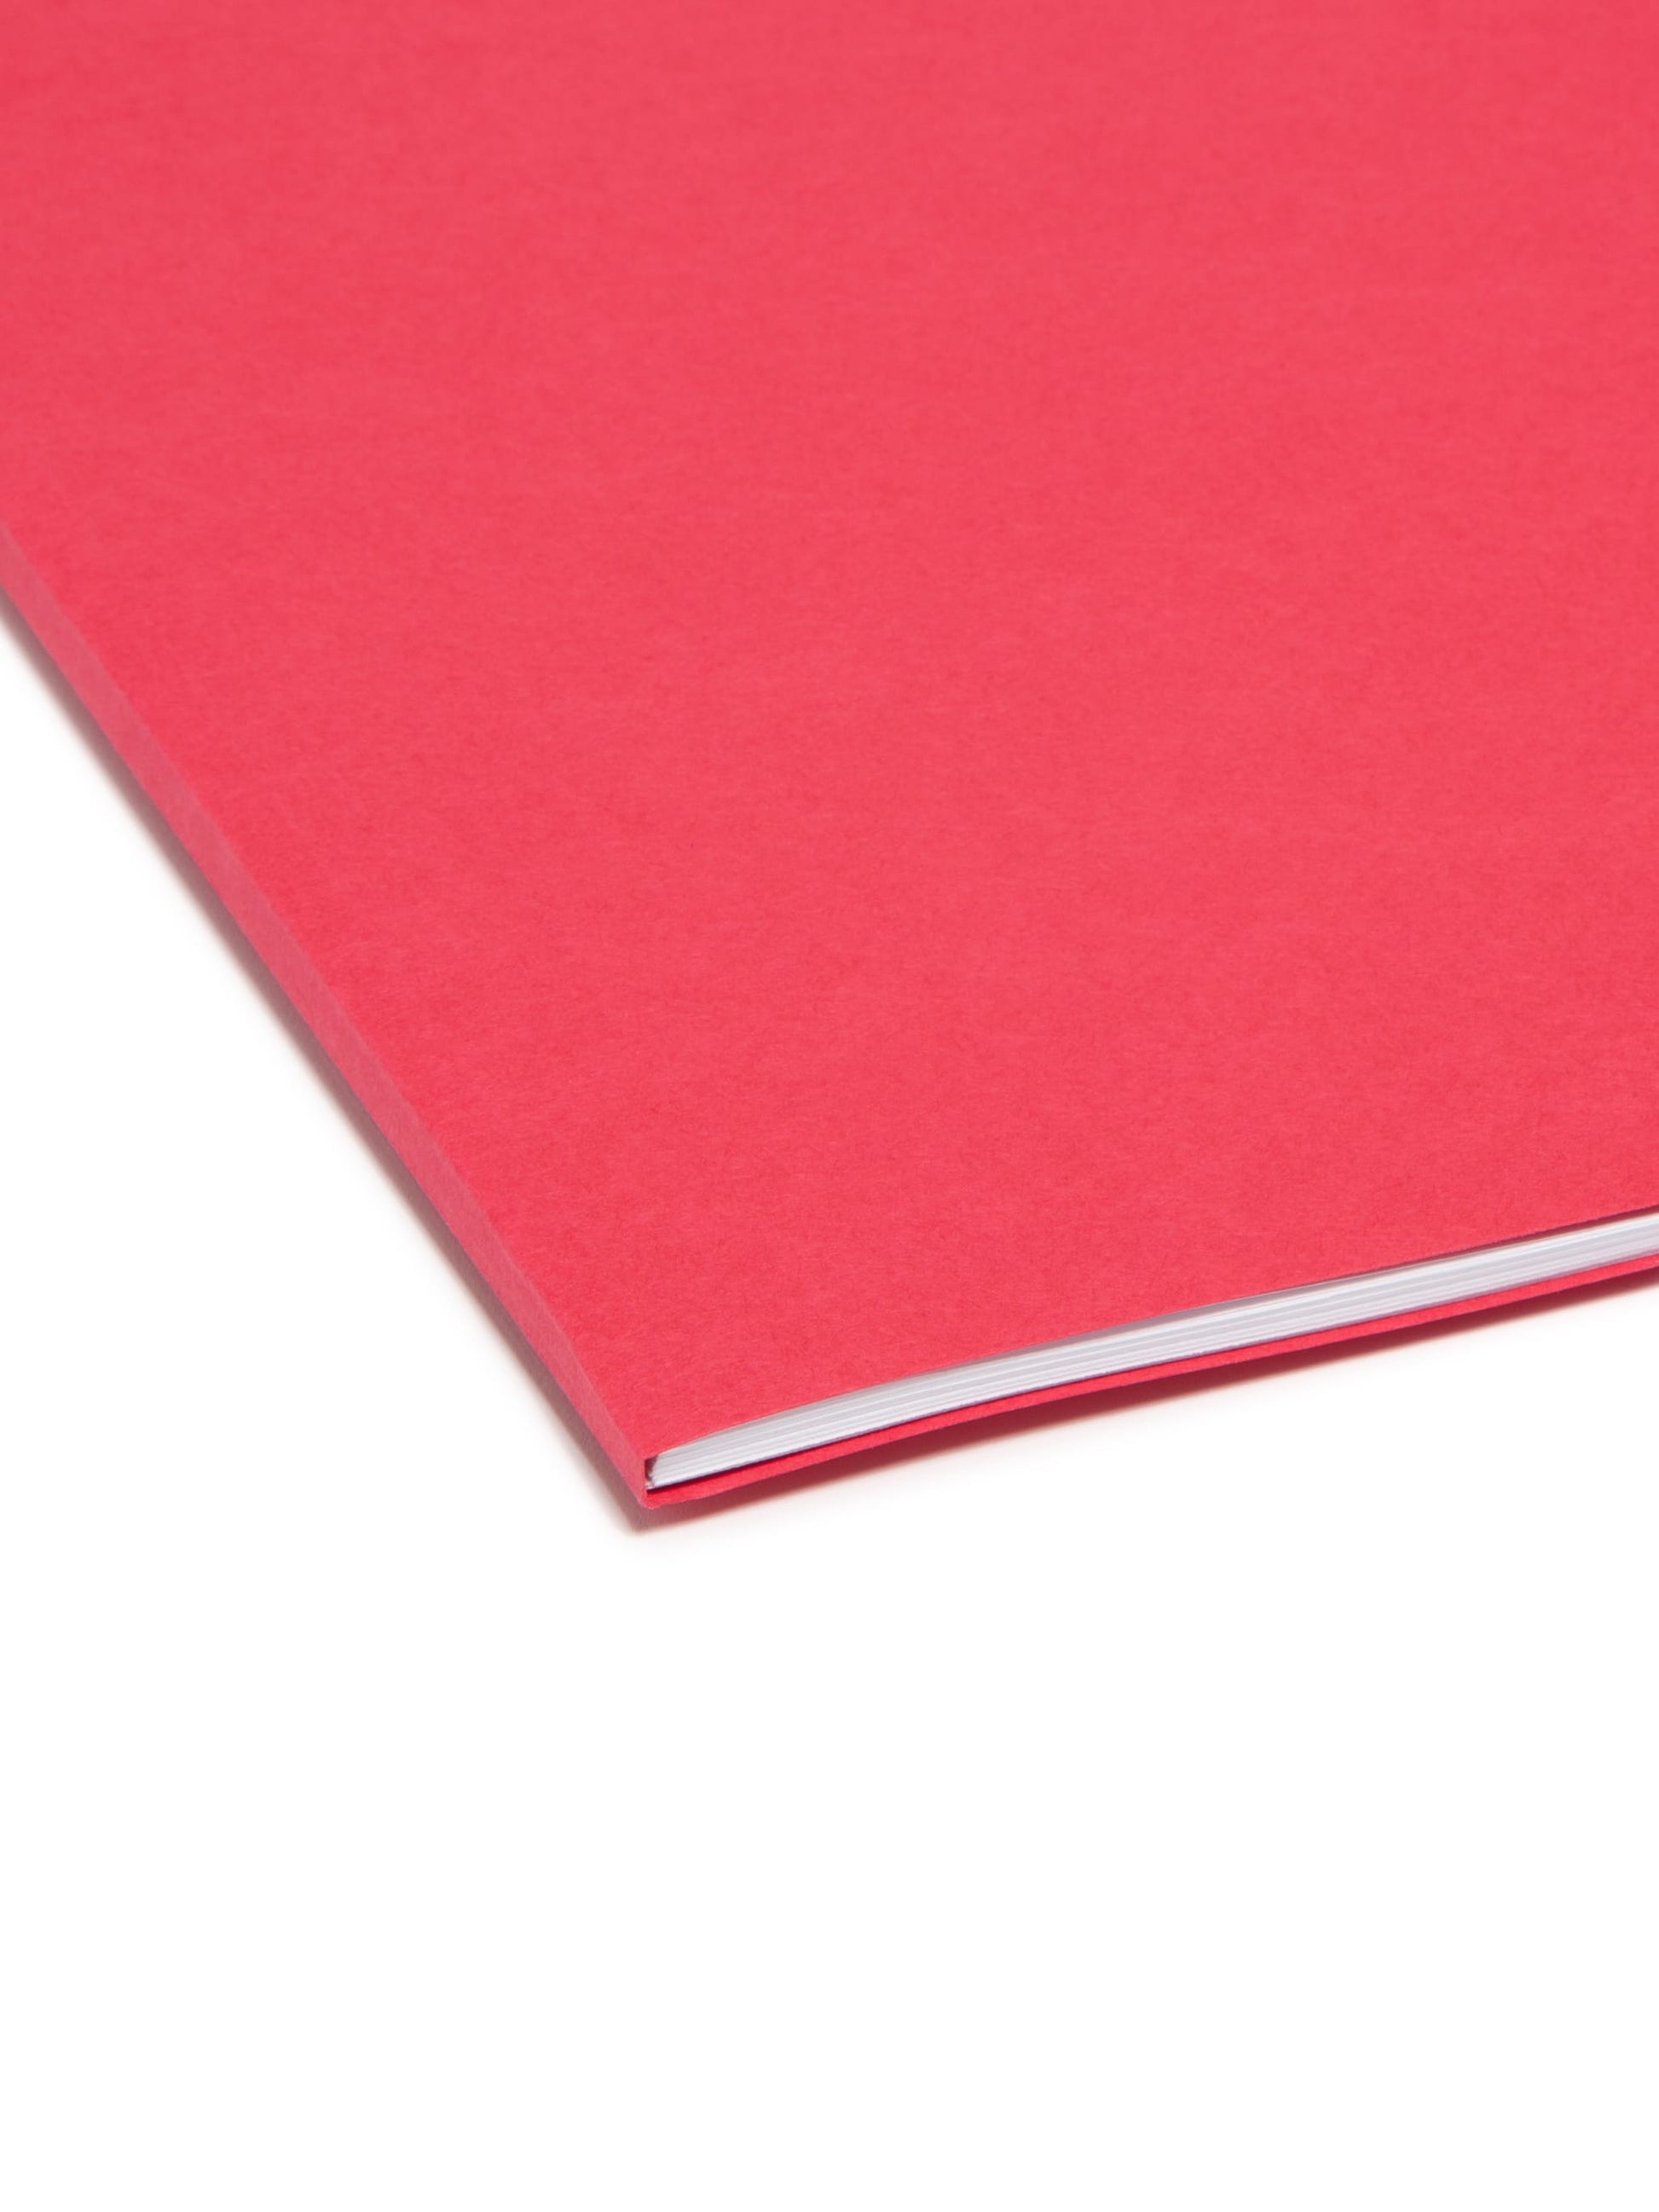 Standard File Folders, 1/3-Cut Tab, Assorted Colors Color, Legal Size, Set of 100, 086486169431